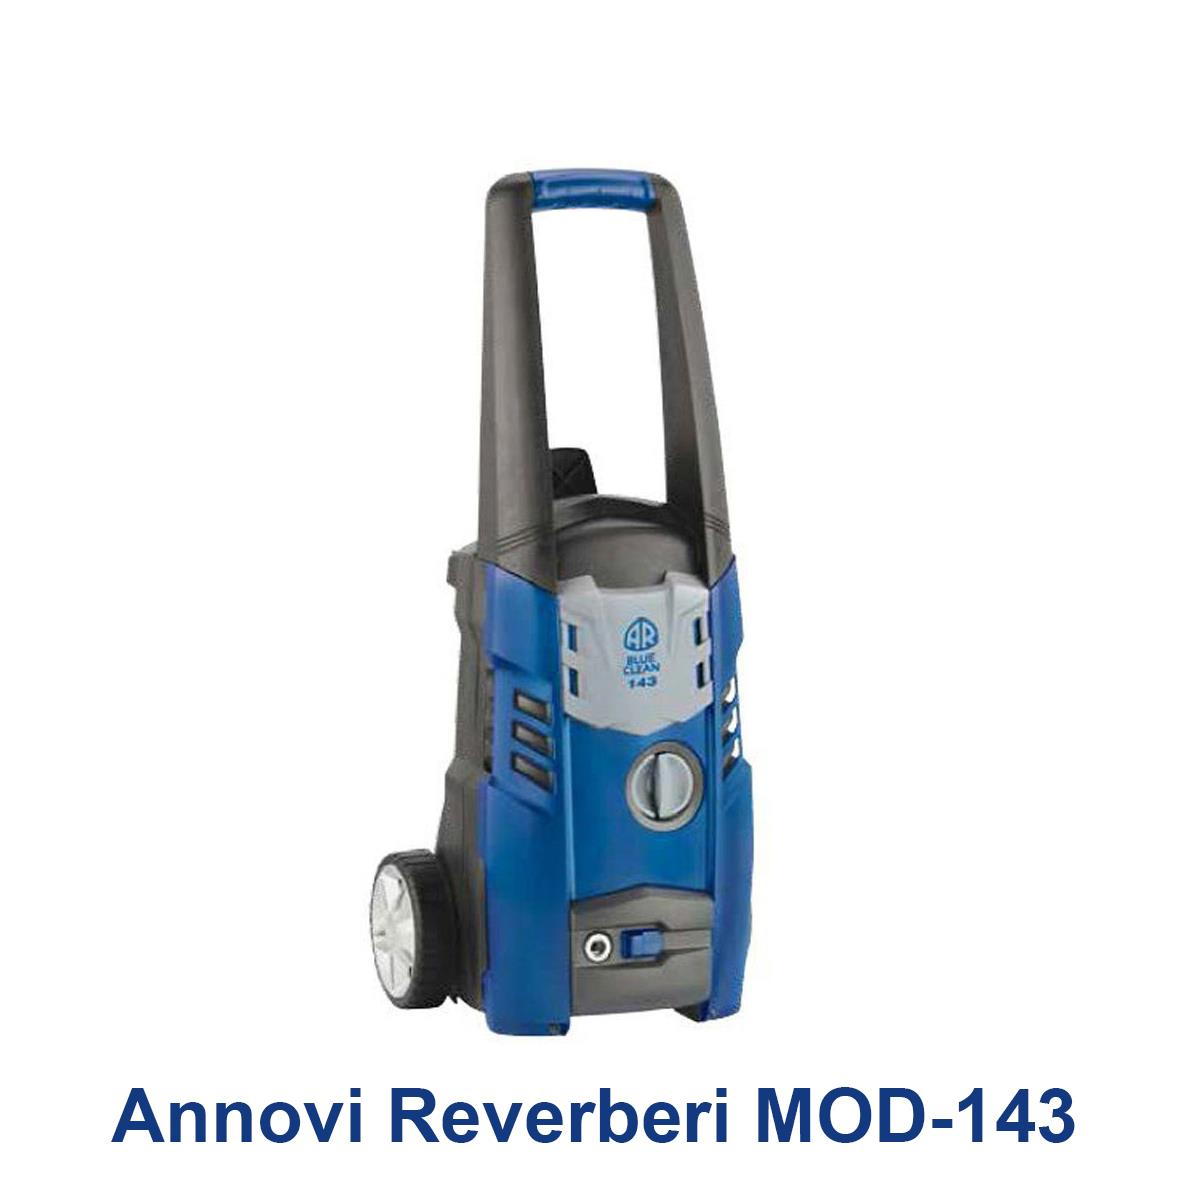 Annovi-Reverberi-MOD-143